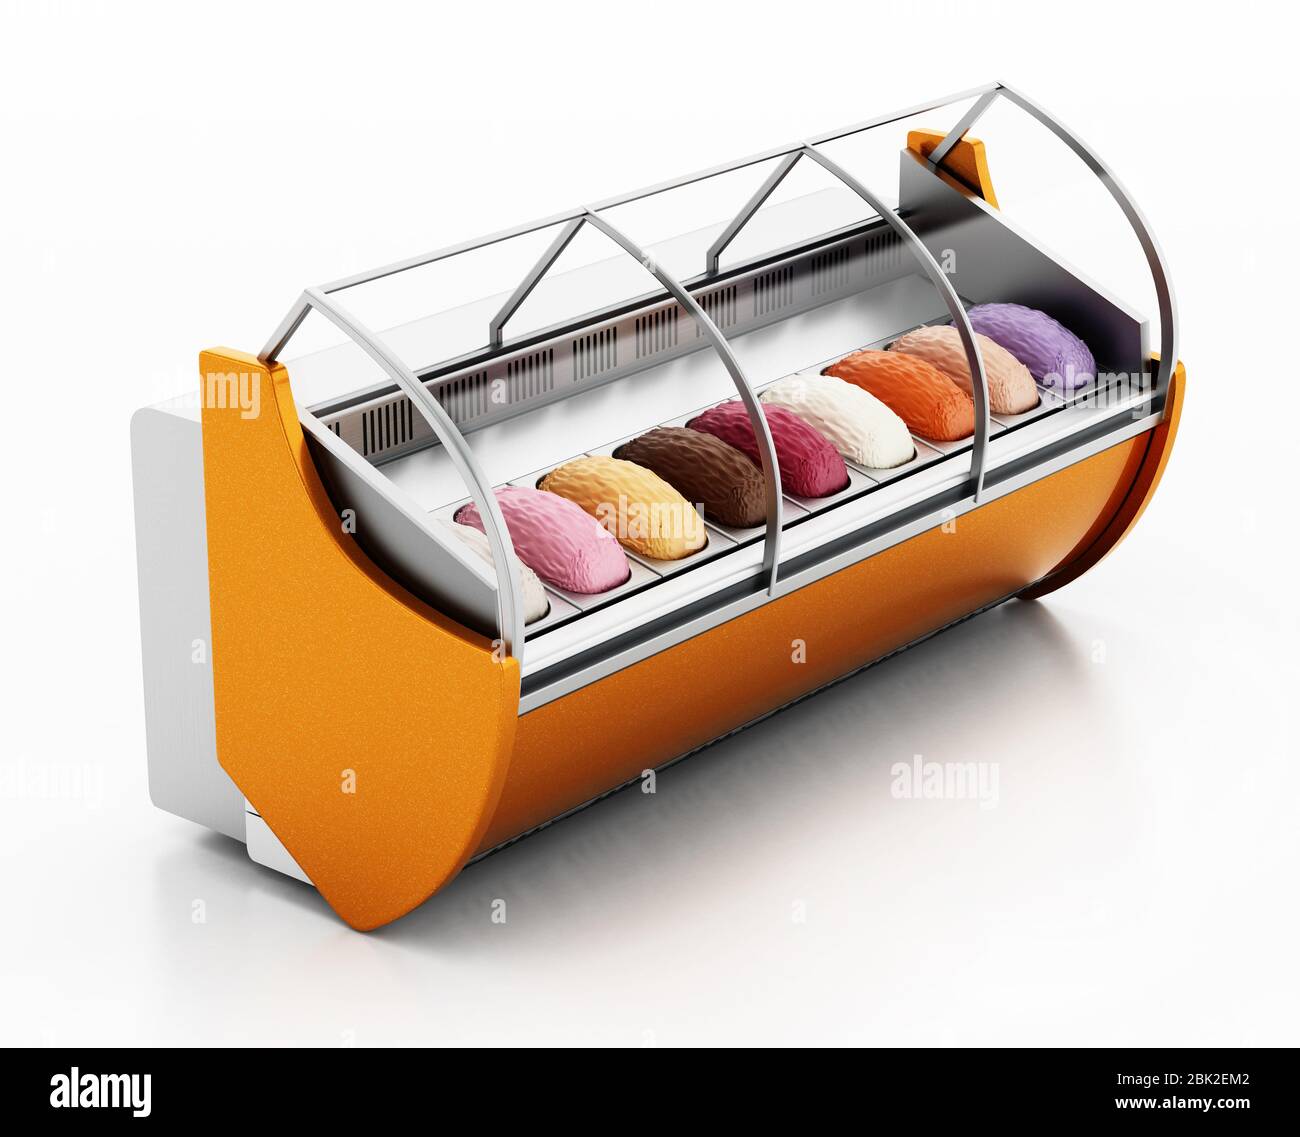 Ice cream refrigerator isolated on white background. 3D illustration. Stock Photo